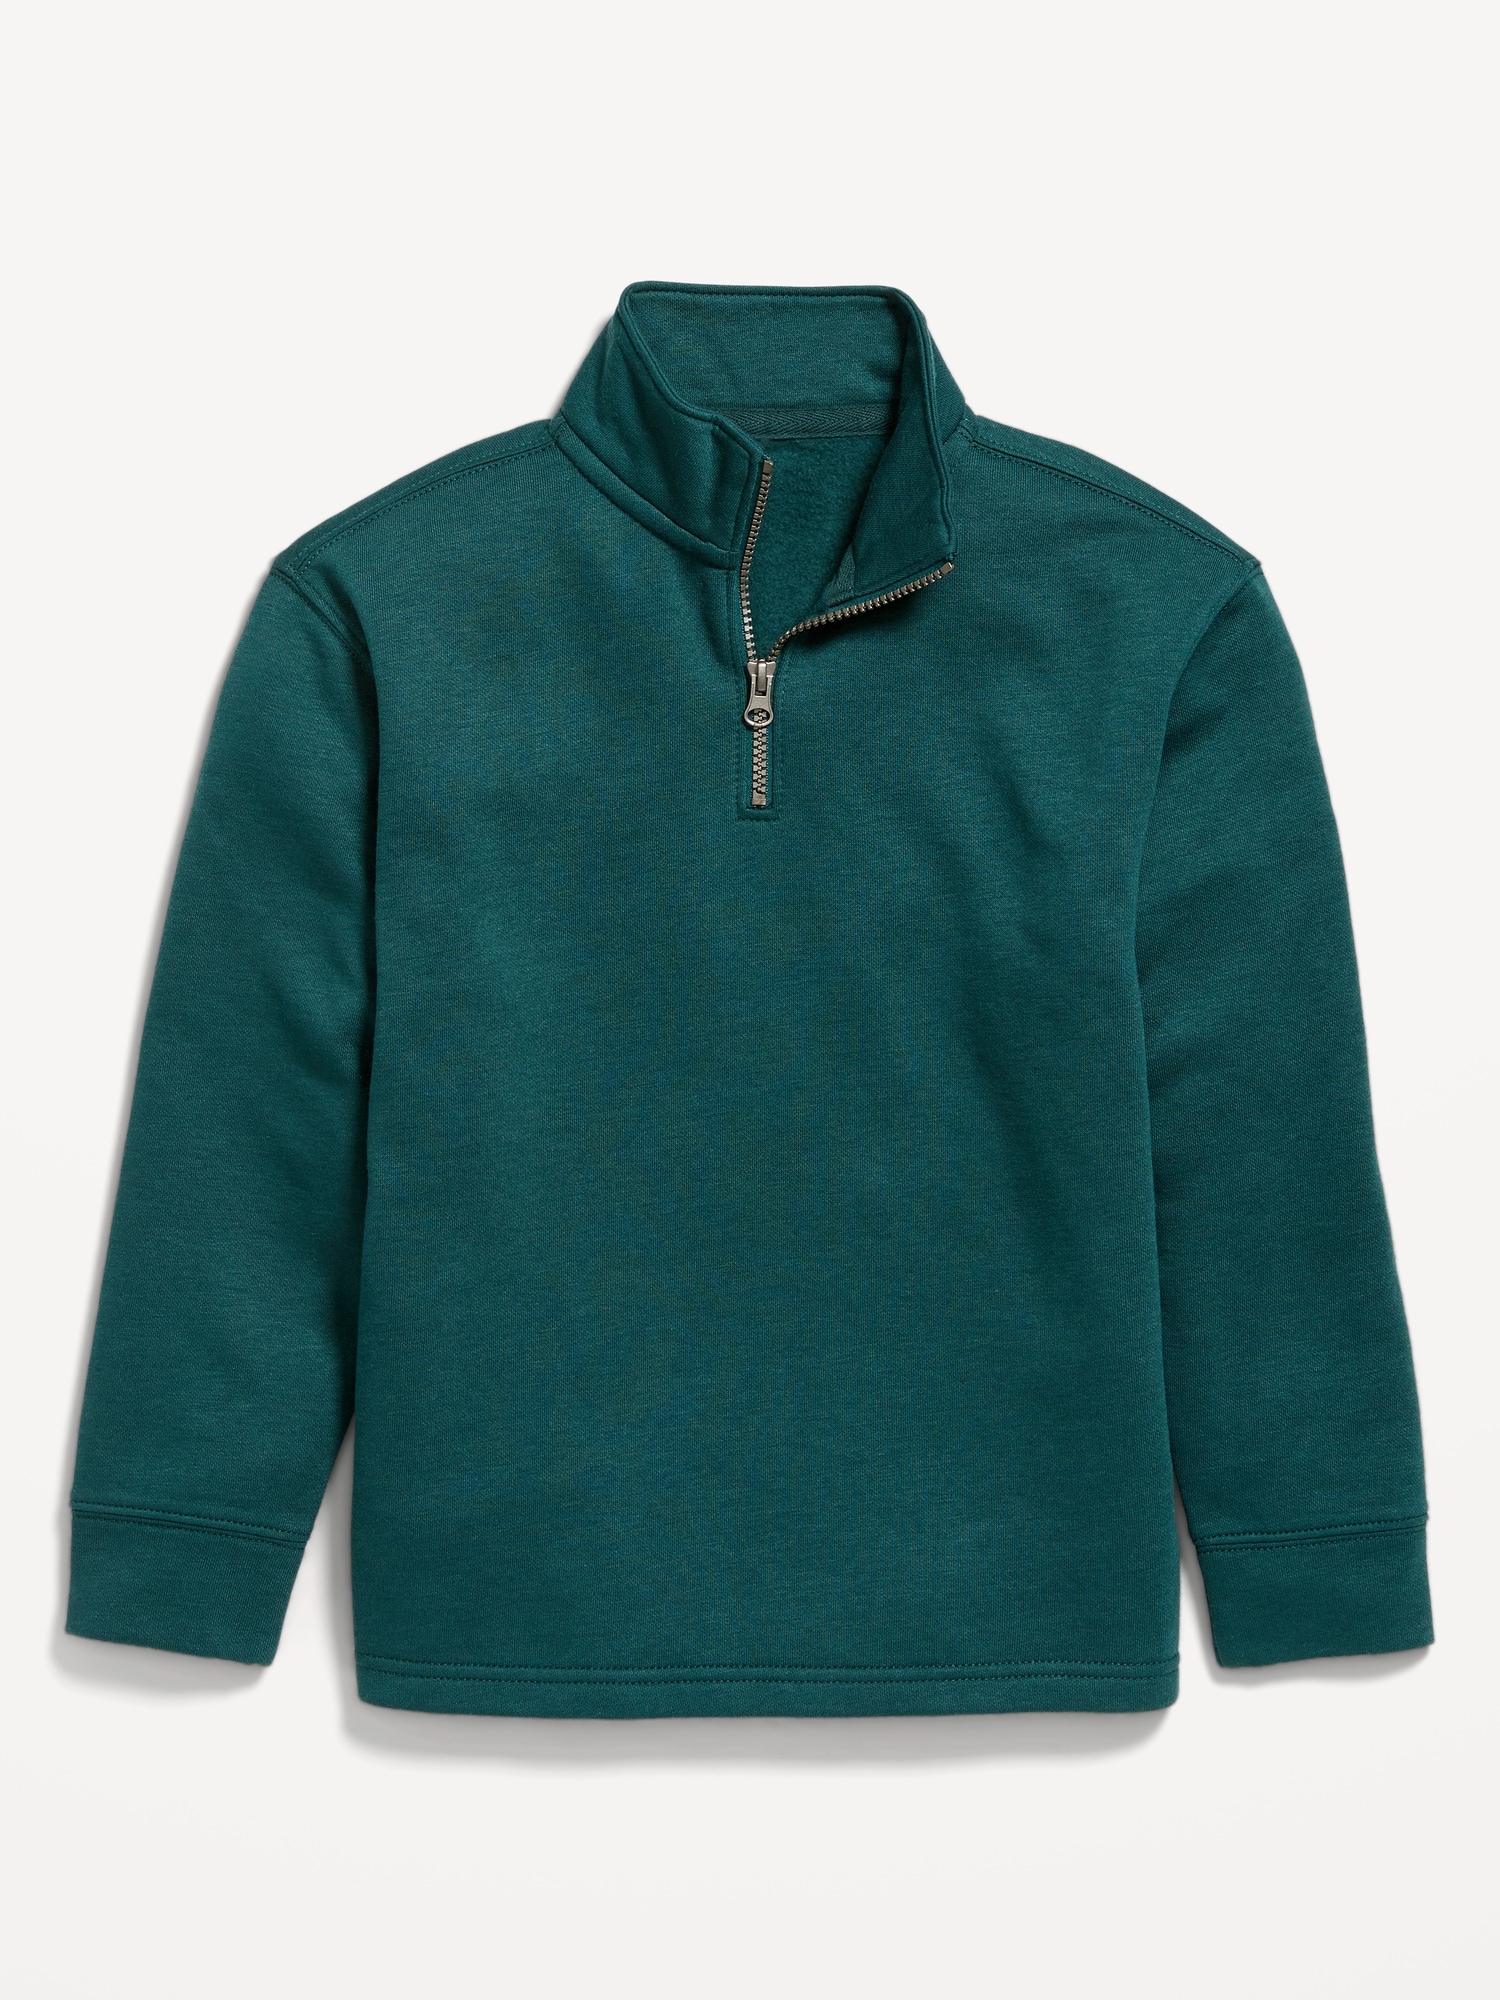 Long-Sleeve Quarter-Zip Sweatshirt for Boys | Old Navy